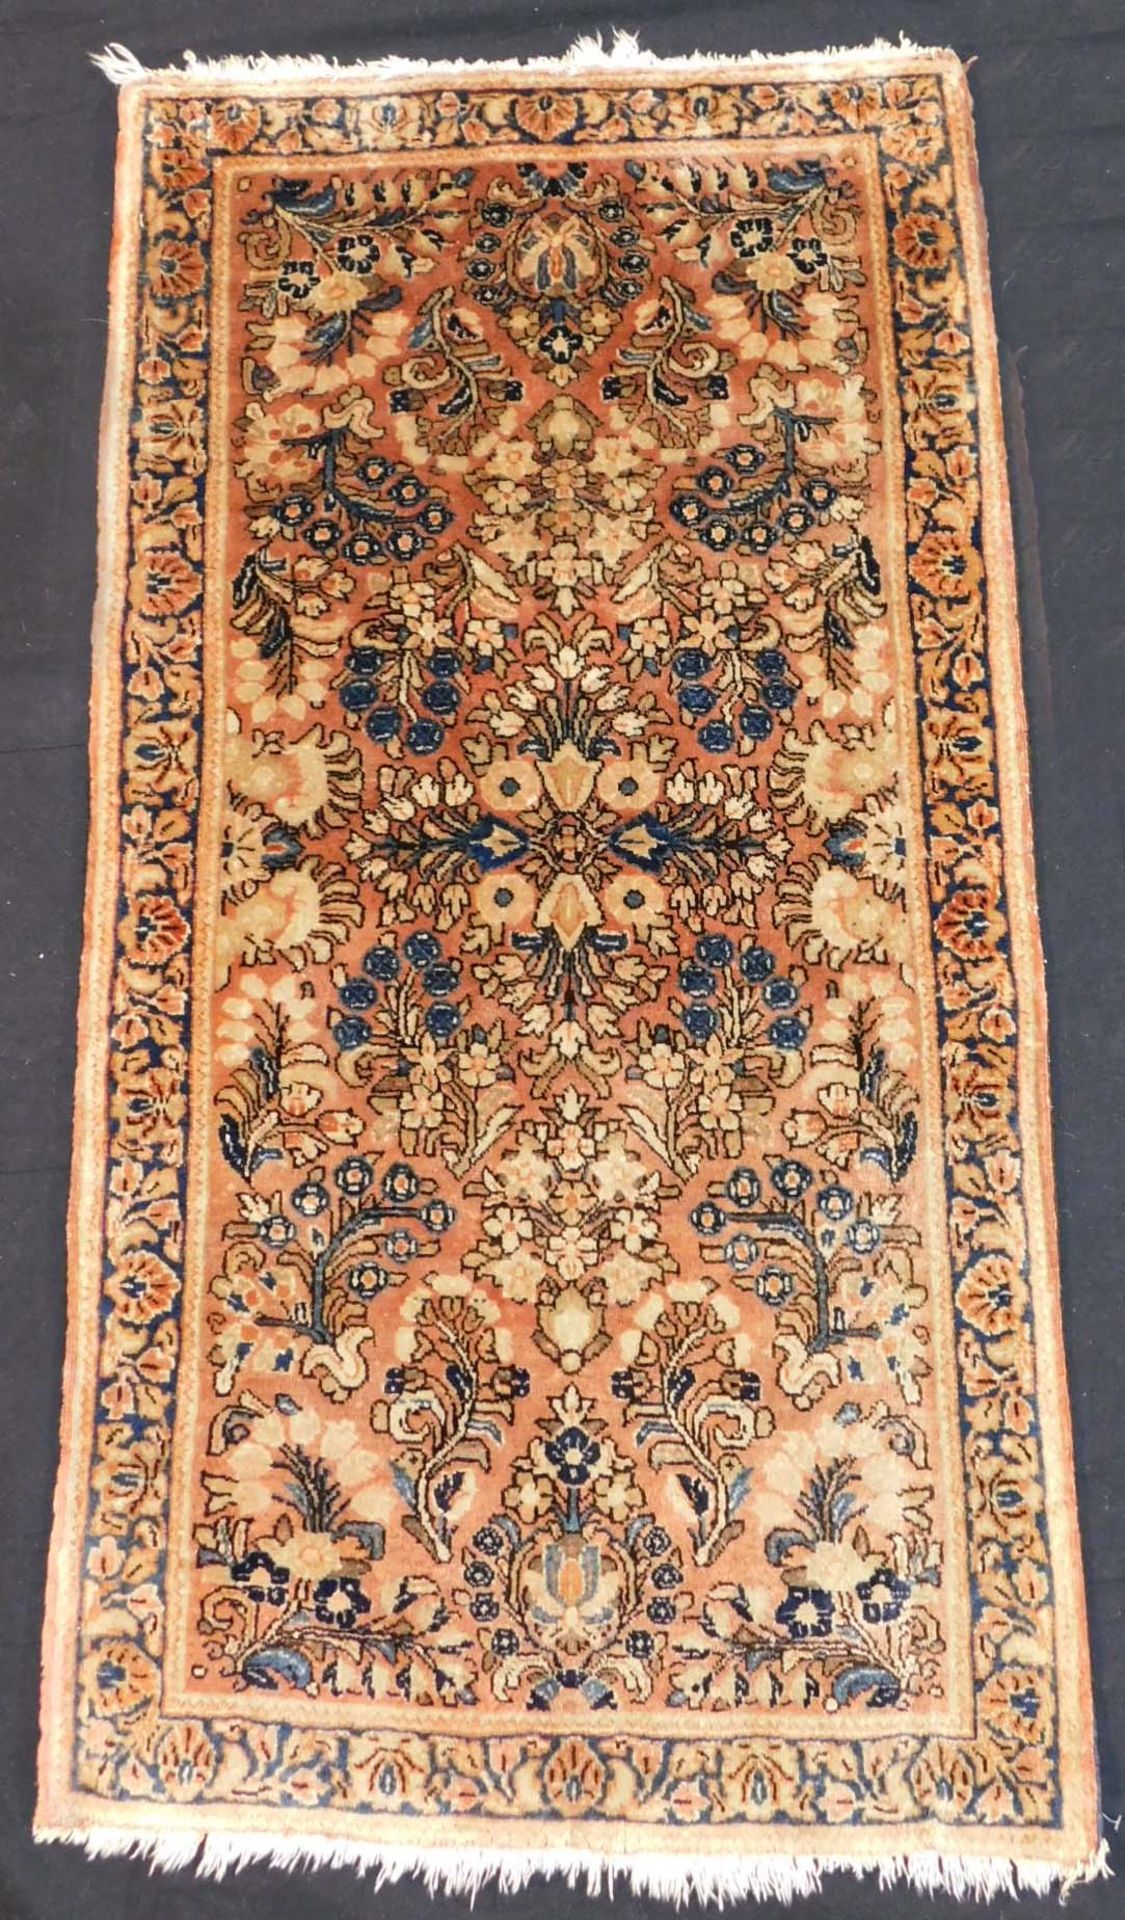 2 Saruk Poschti "American Saruk". Persian carpets. Iran, about 80 - 110 years old. - Image 2 of 6